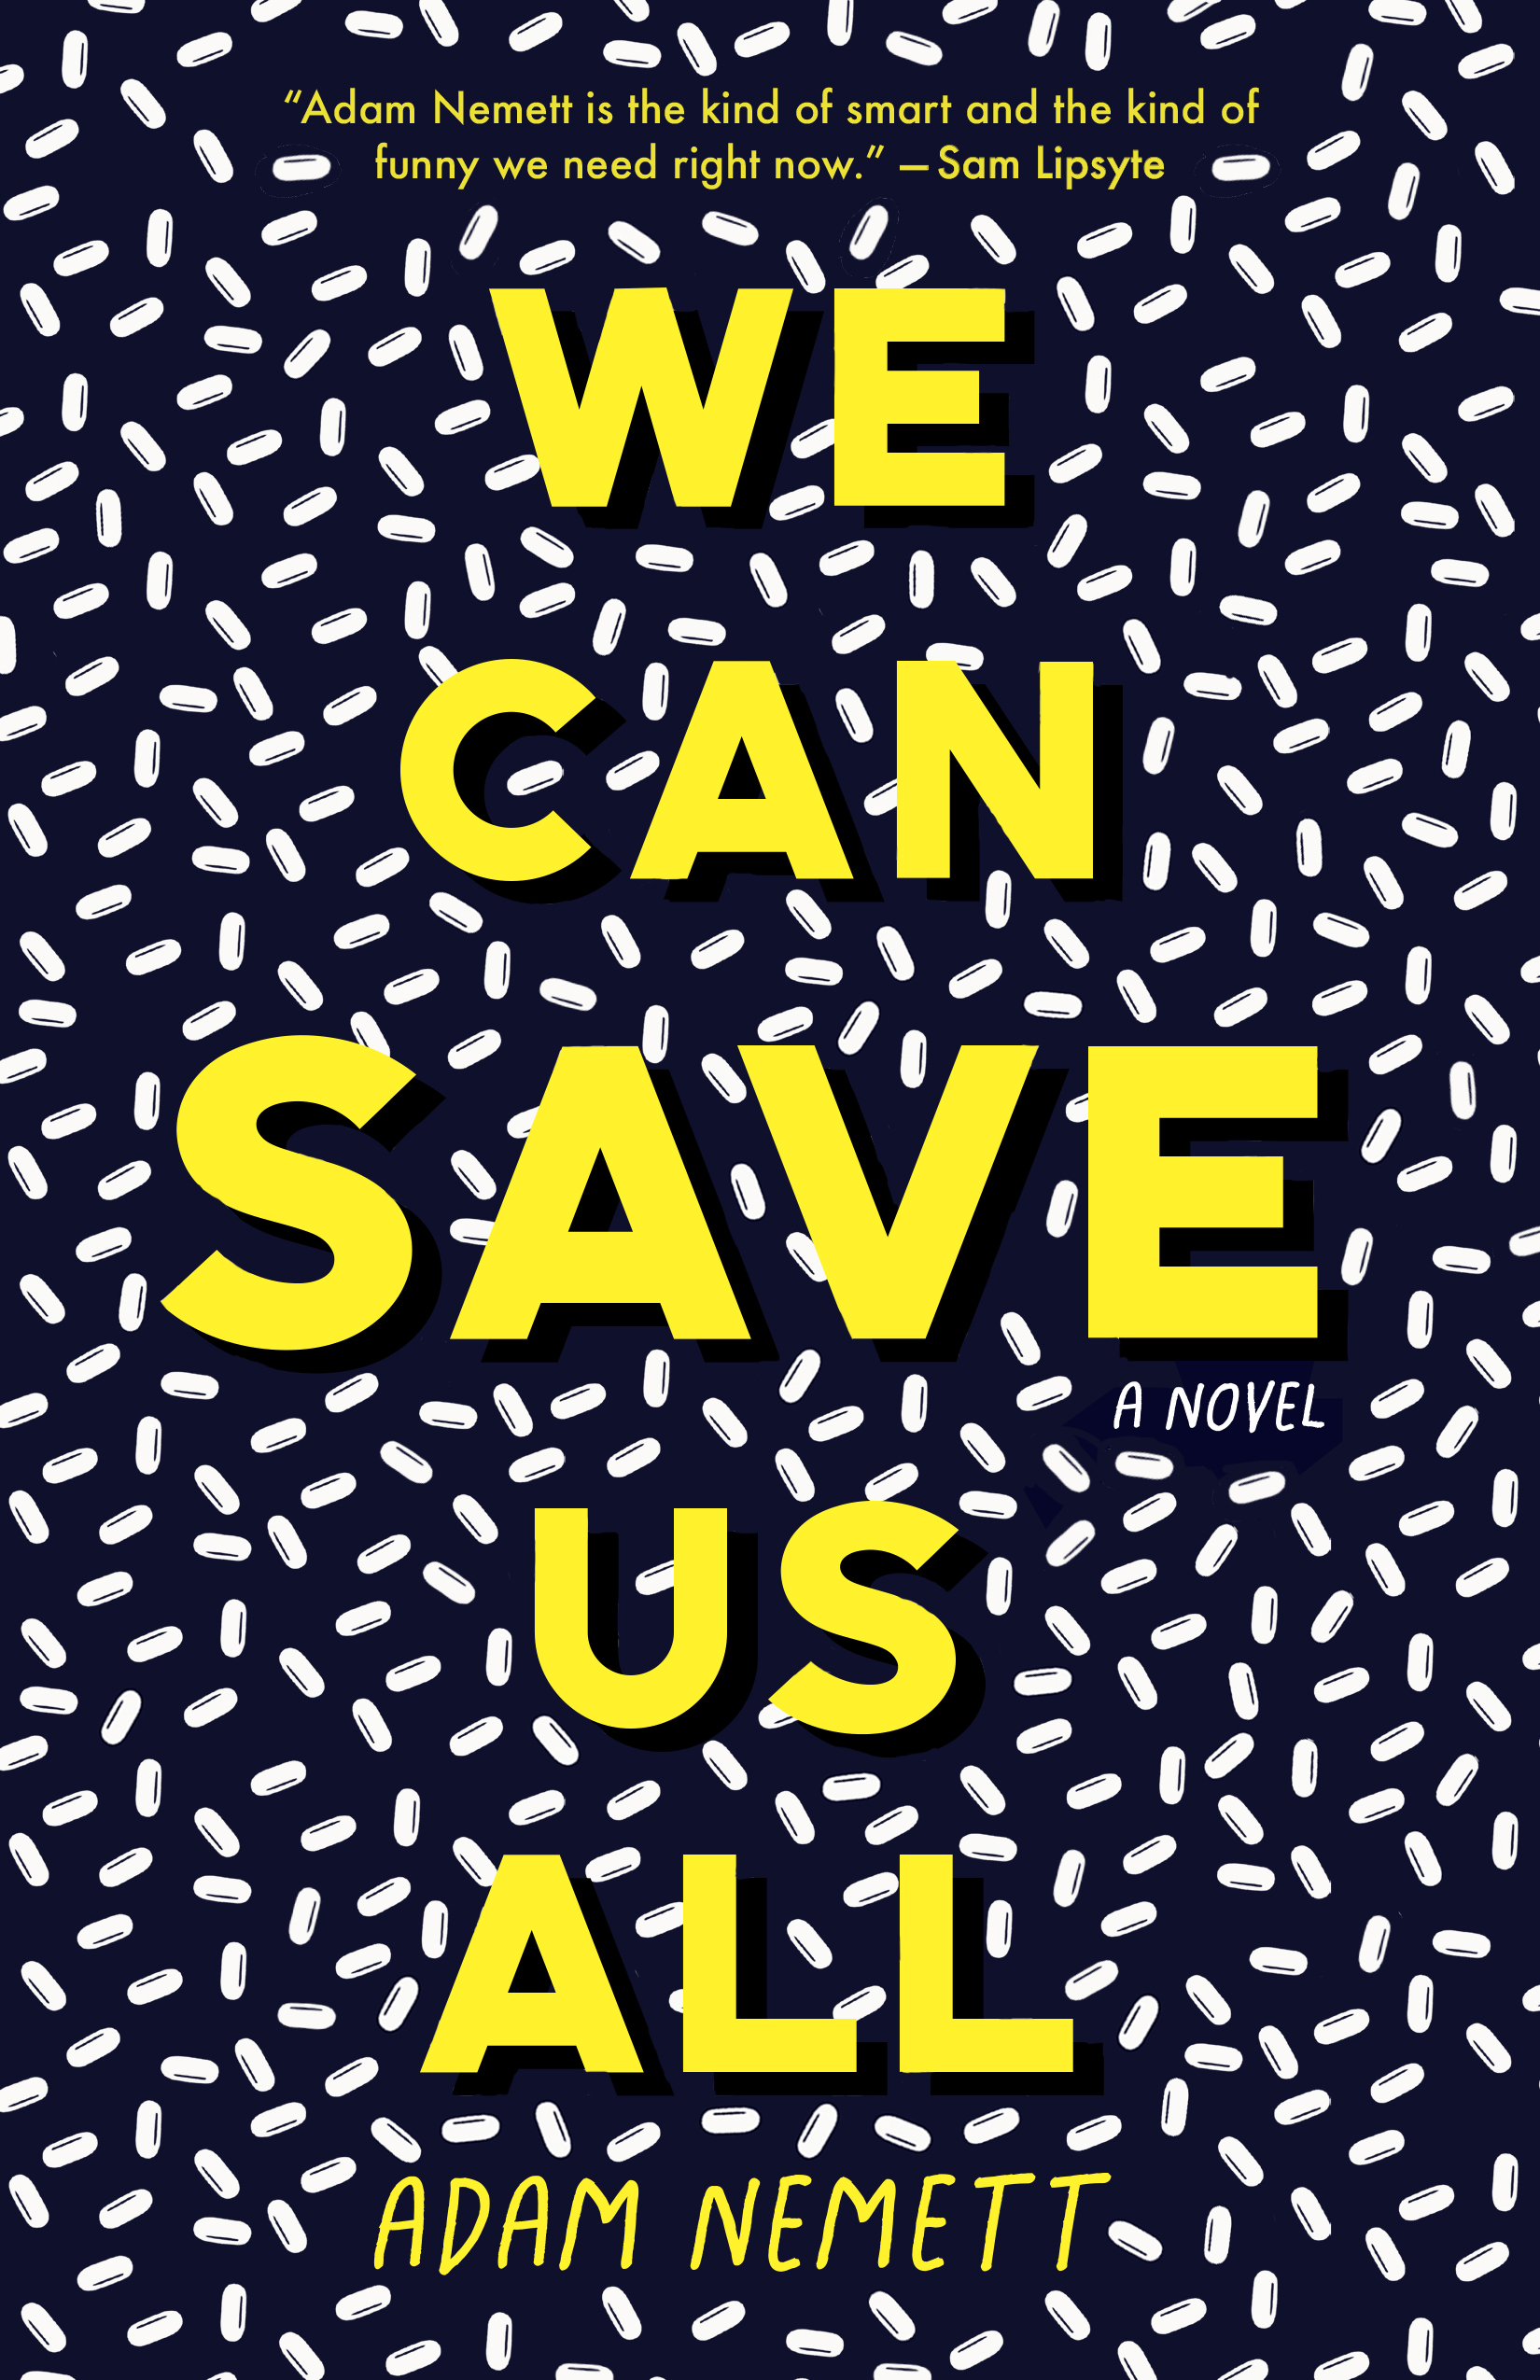 Kind smart. Save us книга. Save us Автор. All we can save книга. Save us перевод.